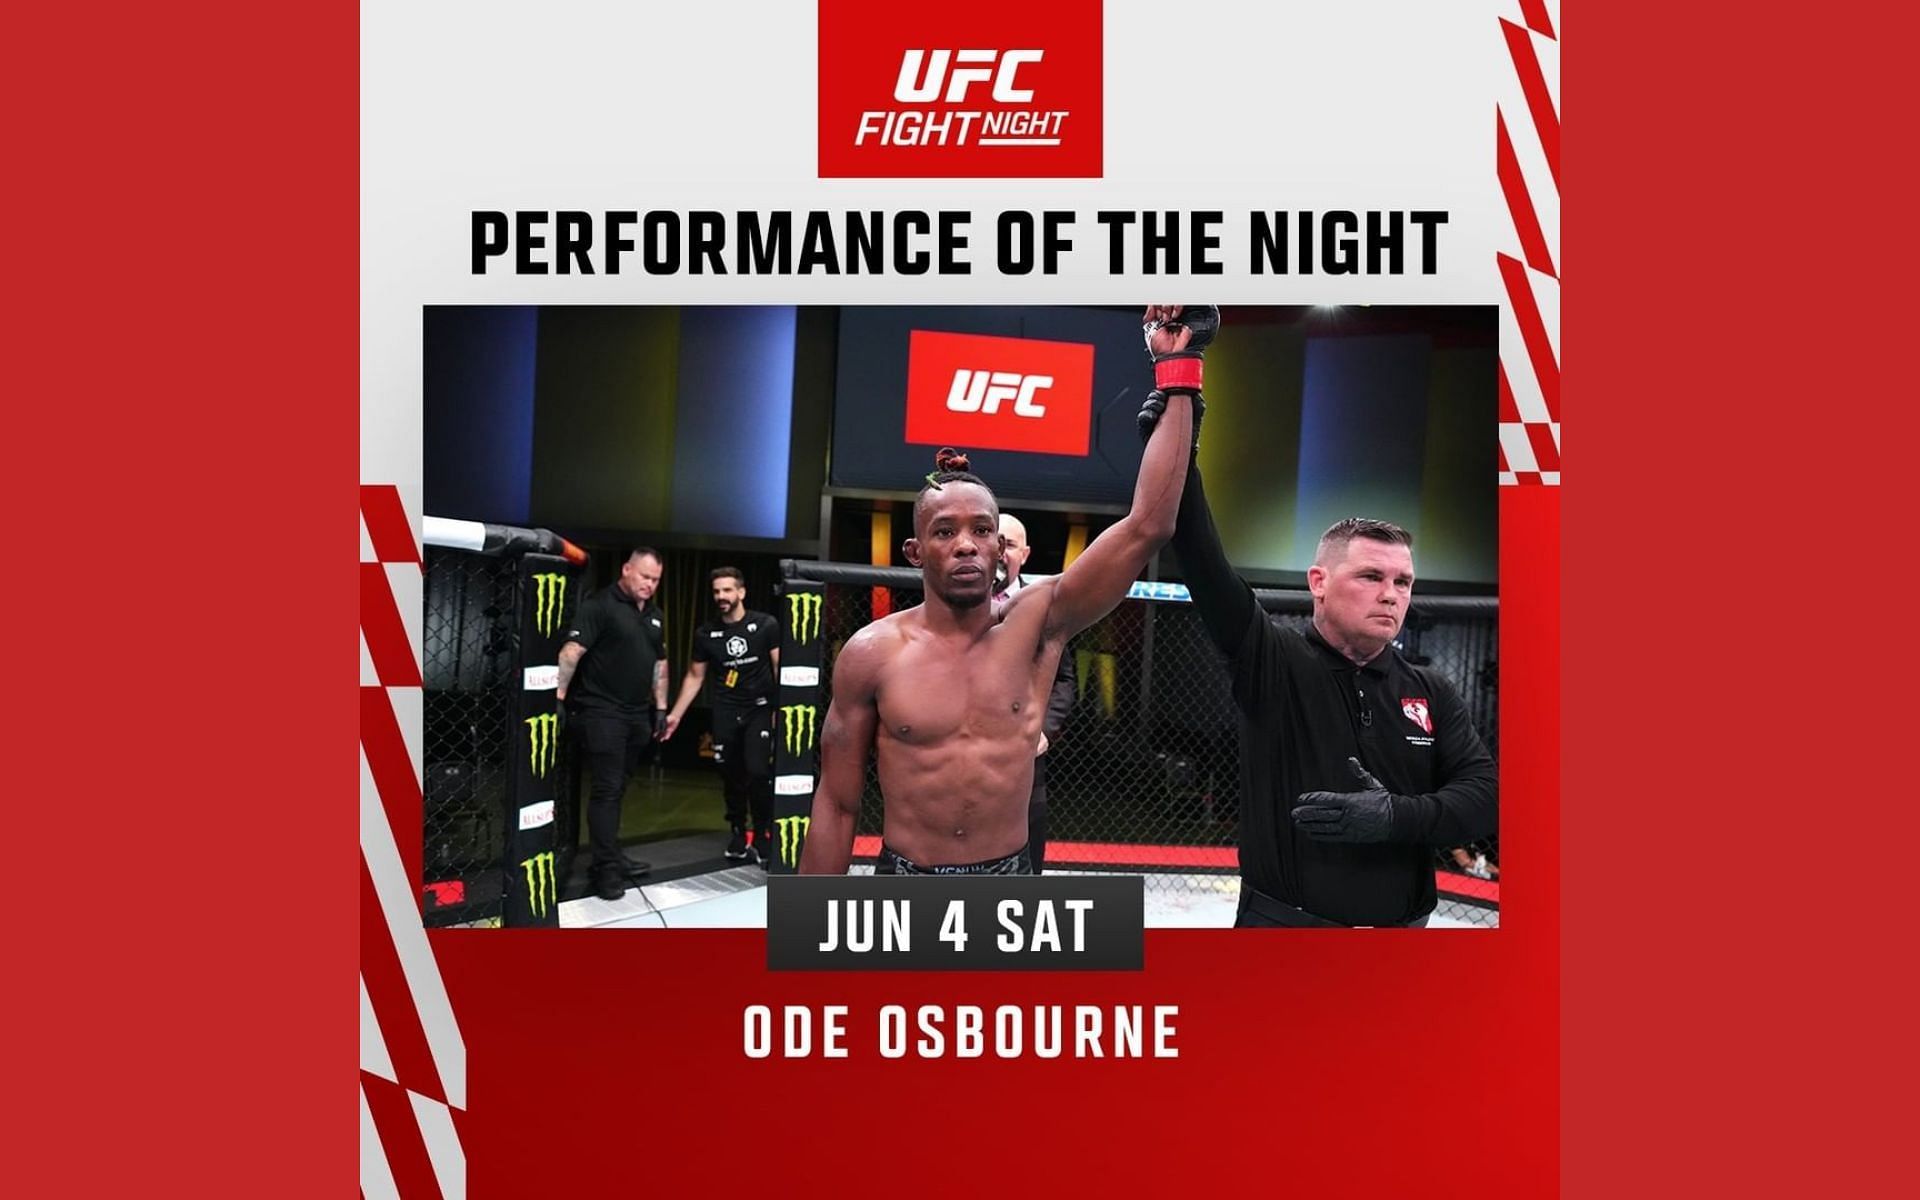 Ode Osbourne wins a post-fight bonus (Photo from @UFC via Instagram)